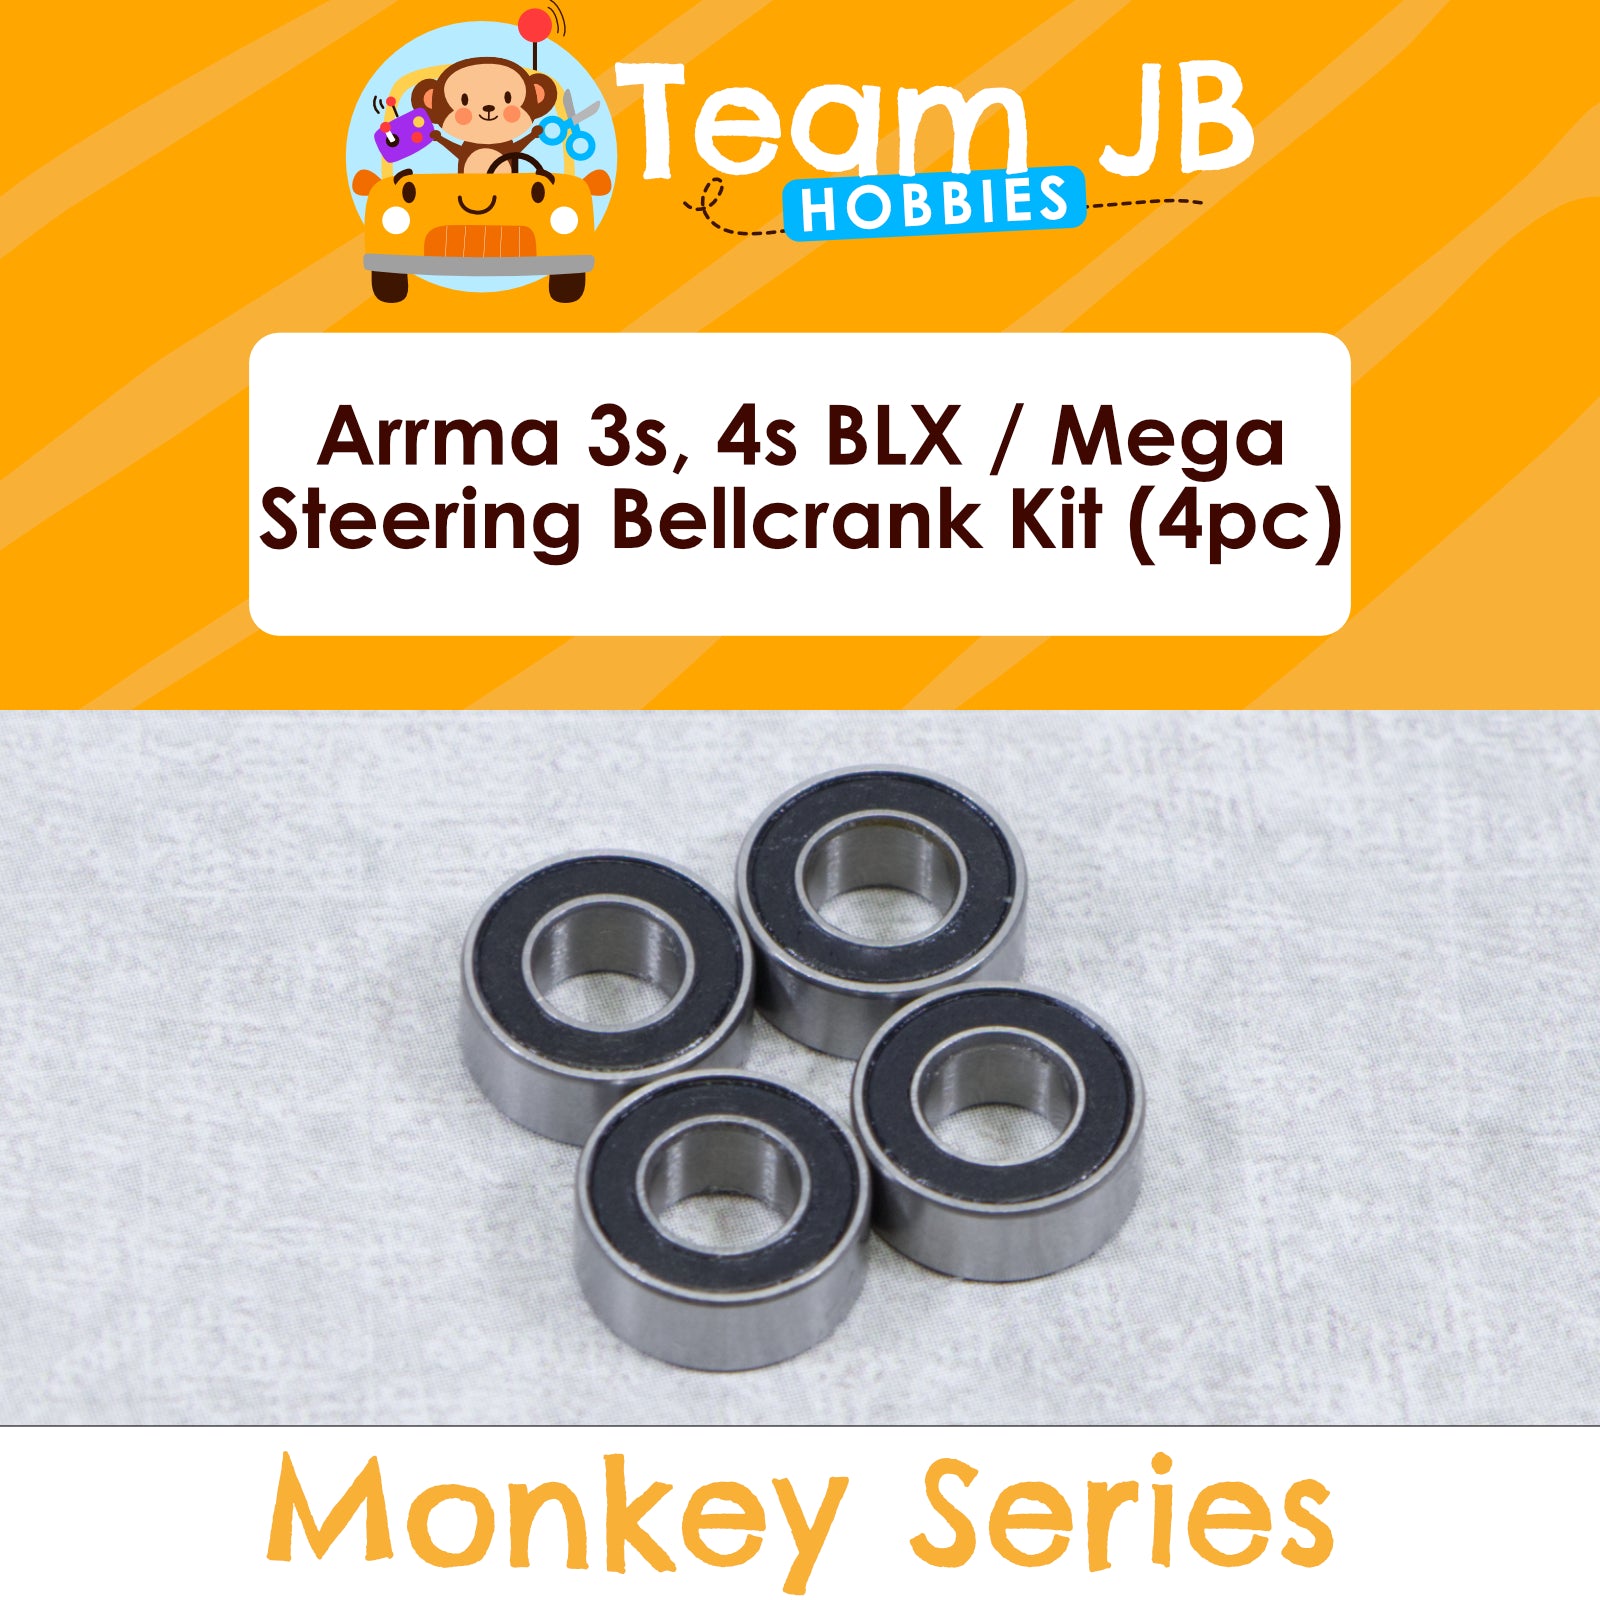 Arrma 3s, 4s BLX / Mega - Steering Bellcrank Sealed Bearing Kit